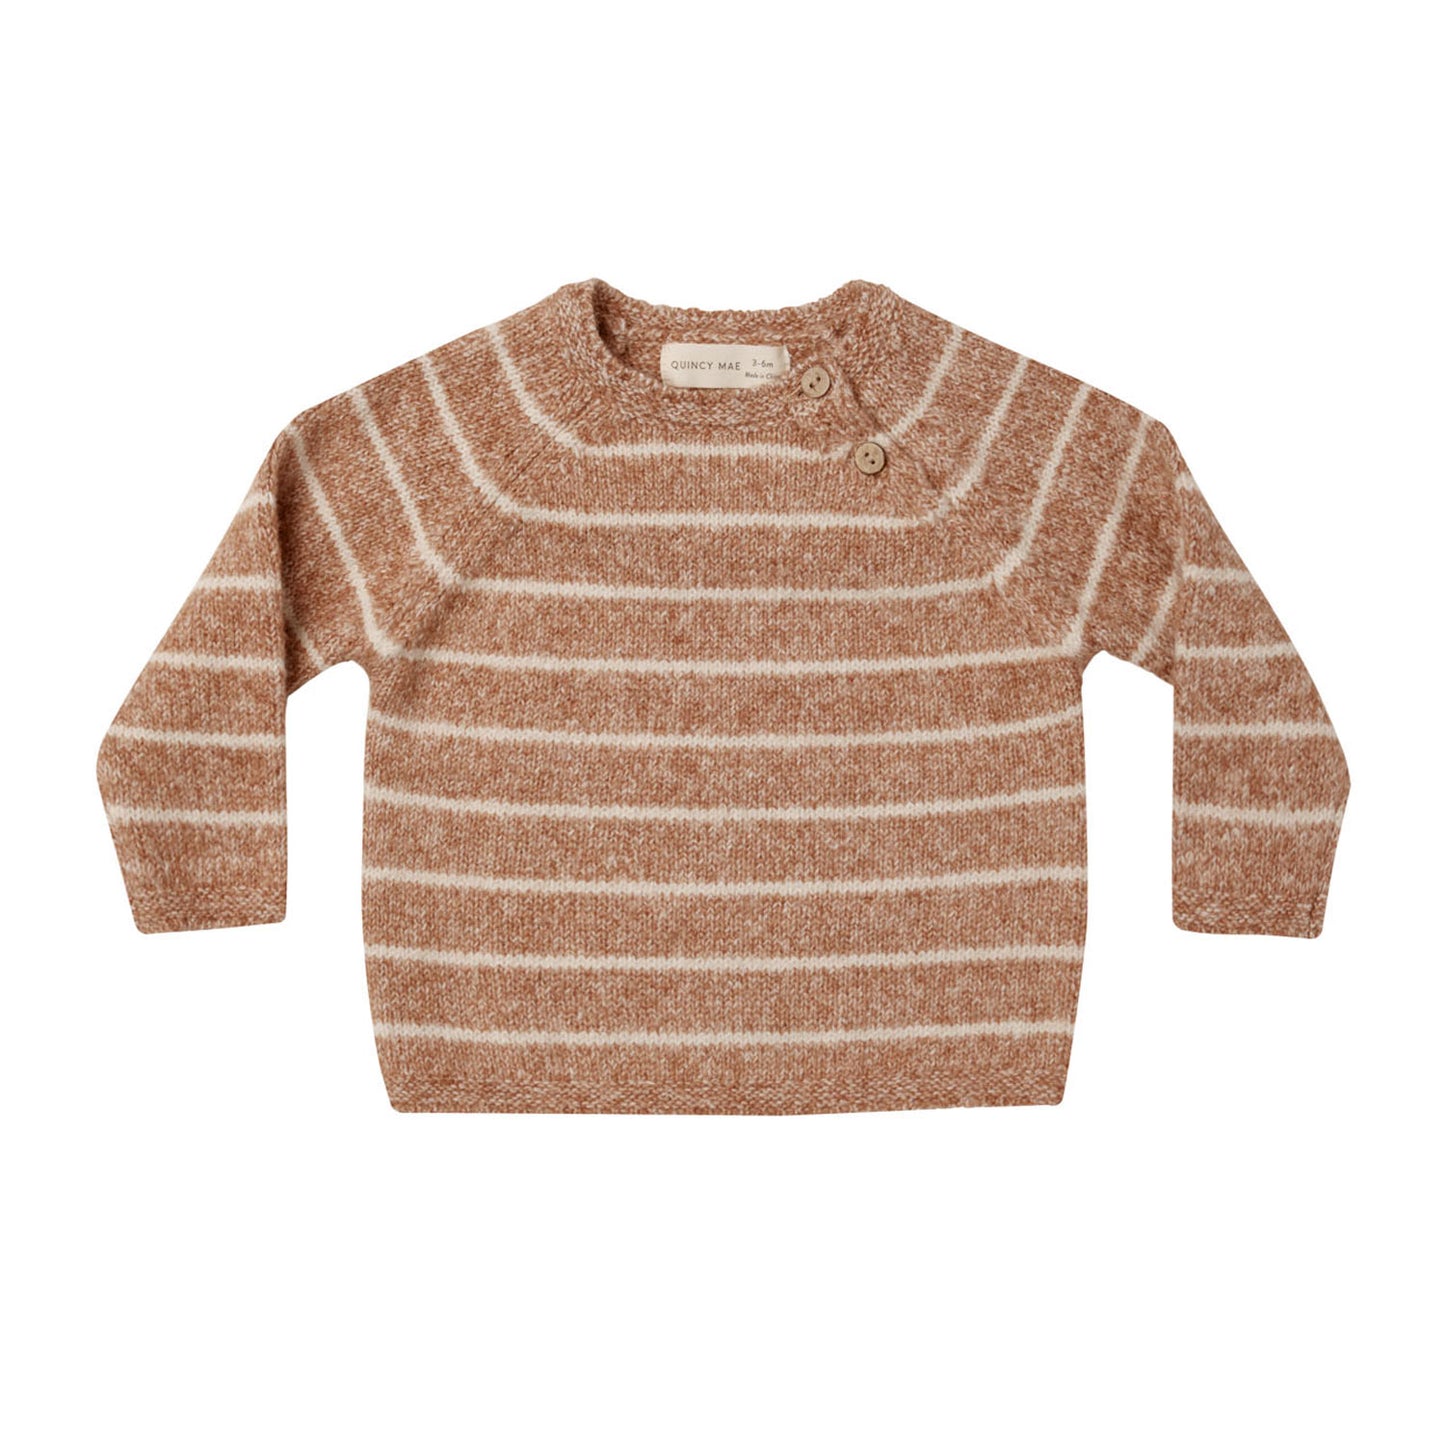 Quincy Mae Ace Knit Sweater - Cinnamon Stripe - Heathered